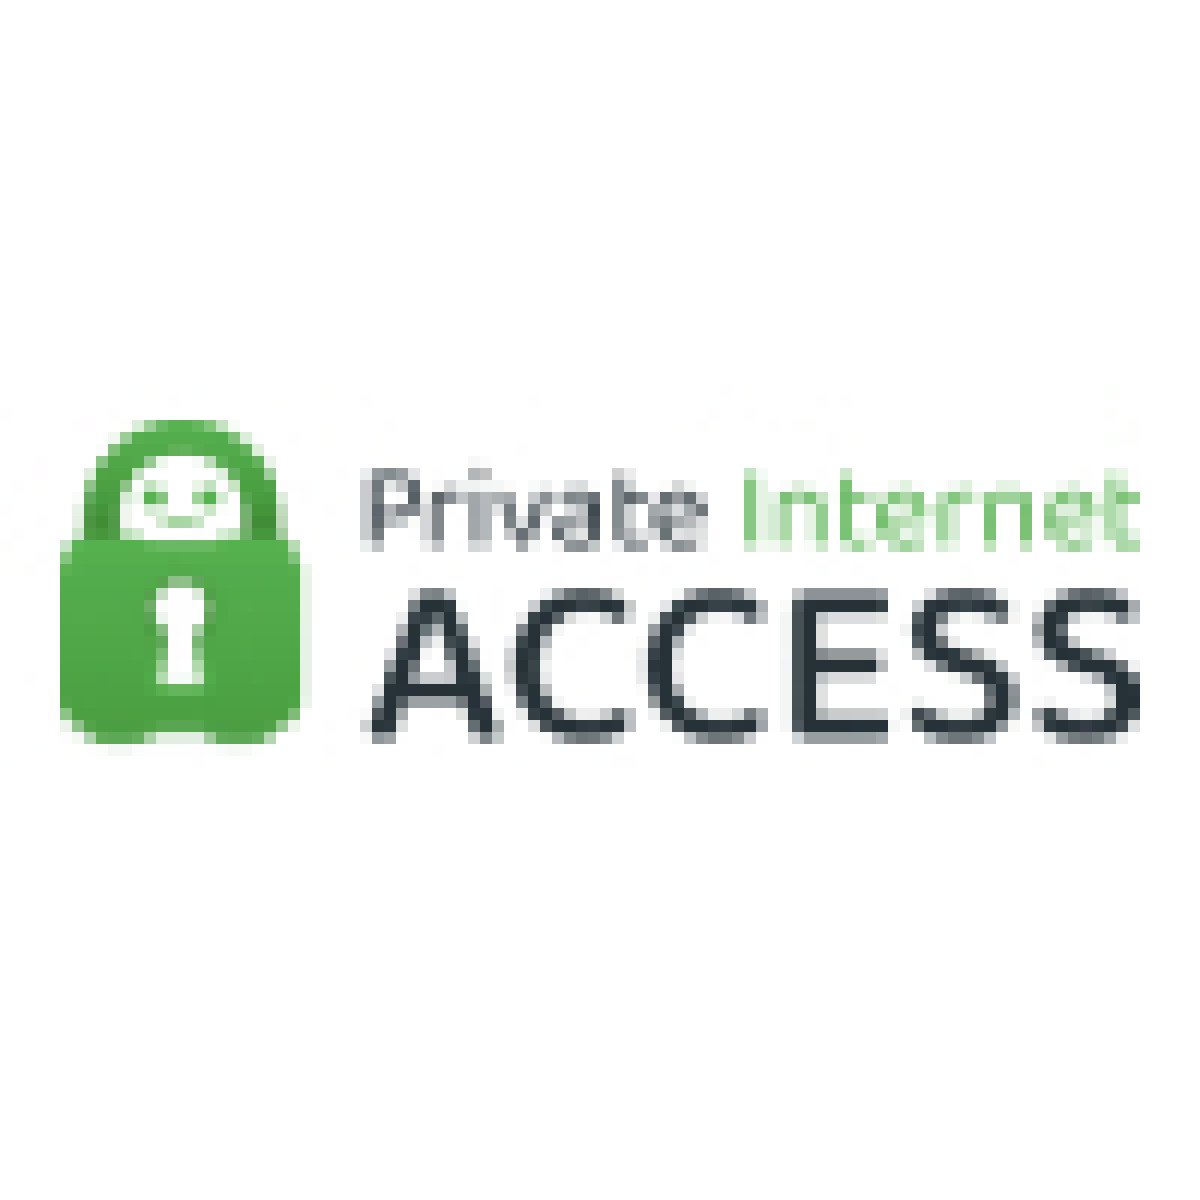 Private internet access logo